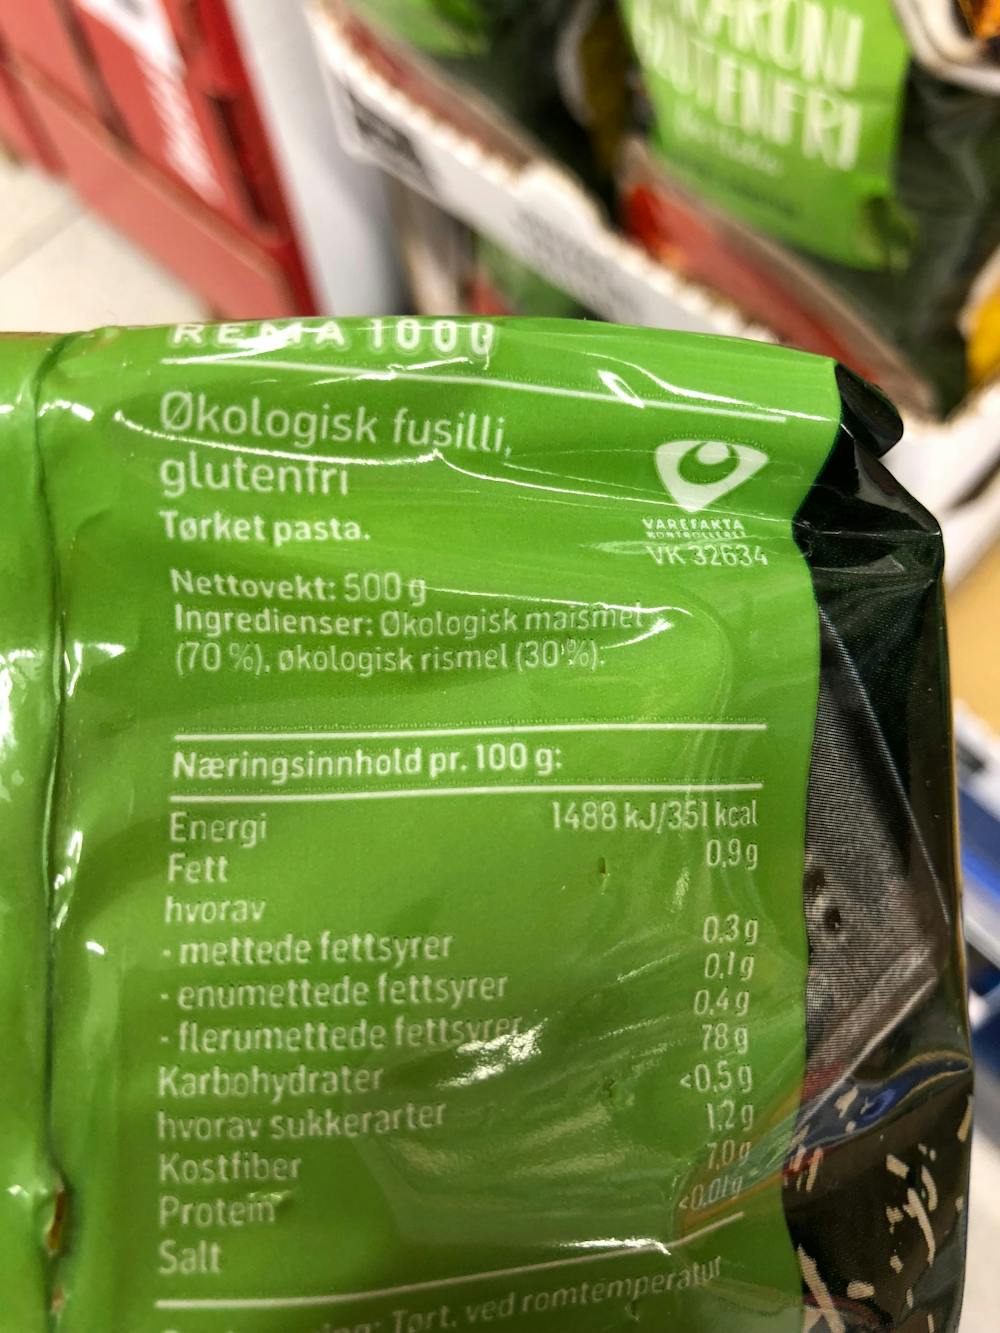 Ingrediensliste - Økologisk fusilli glutenfri, Rema 1000 üten